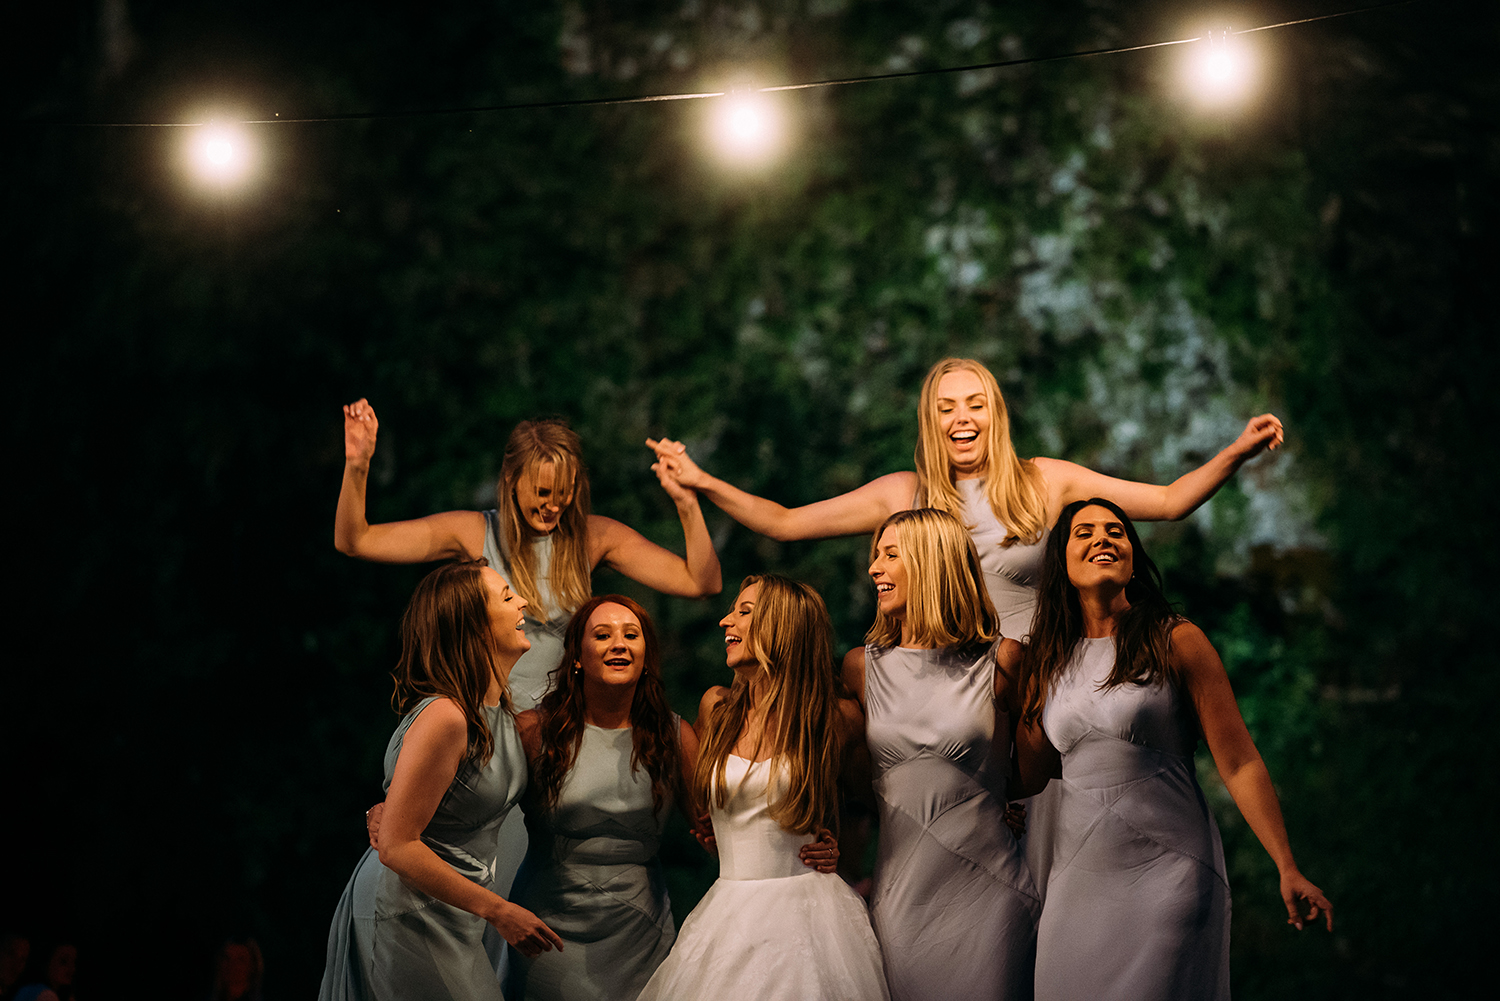  bridesmaids party under festoon lights 